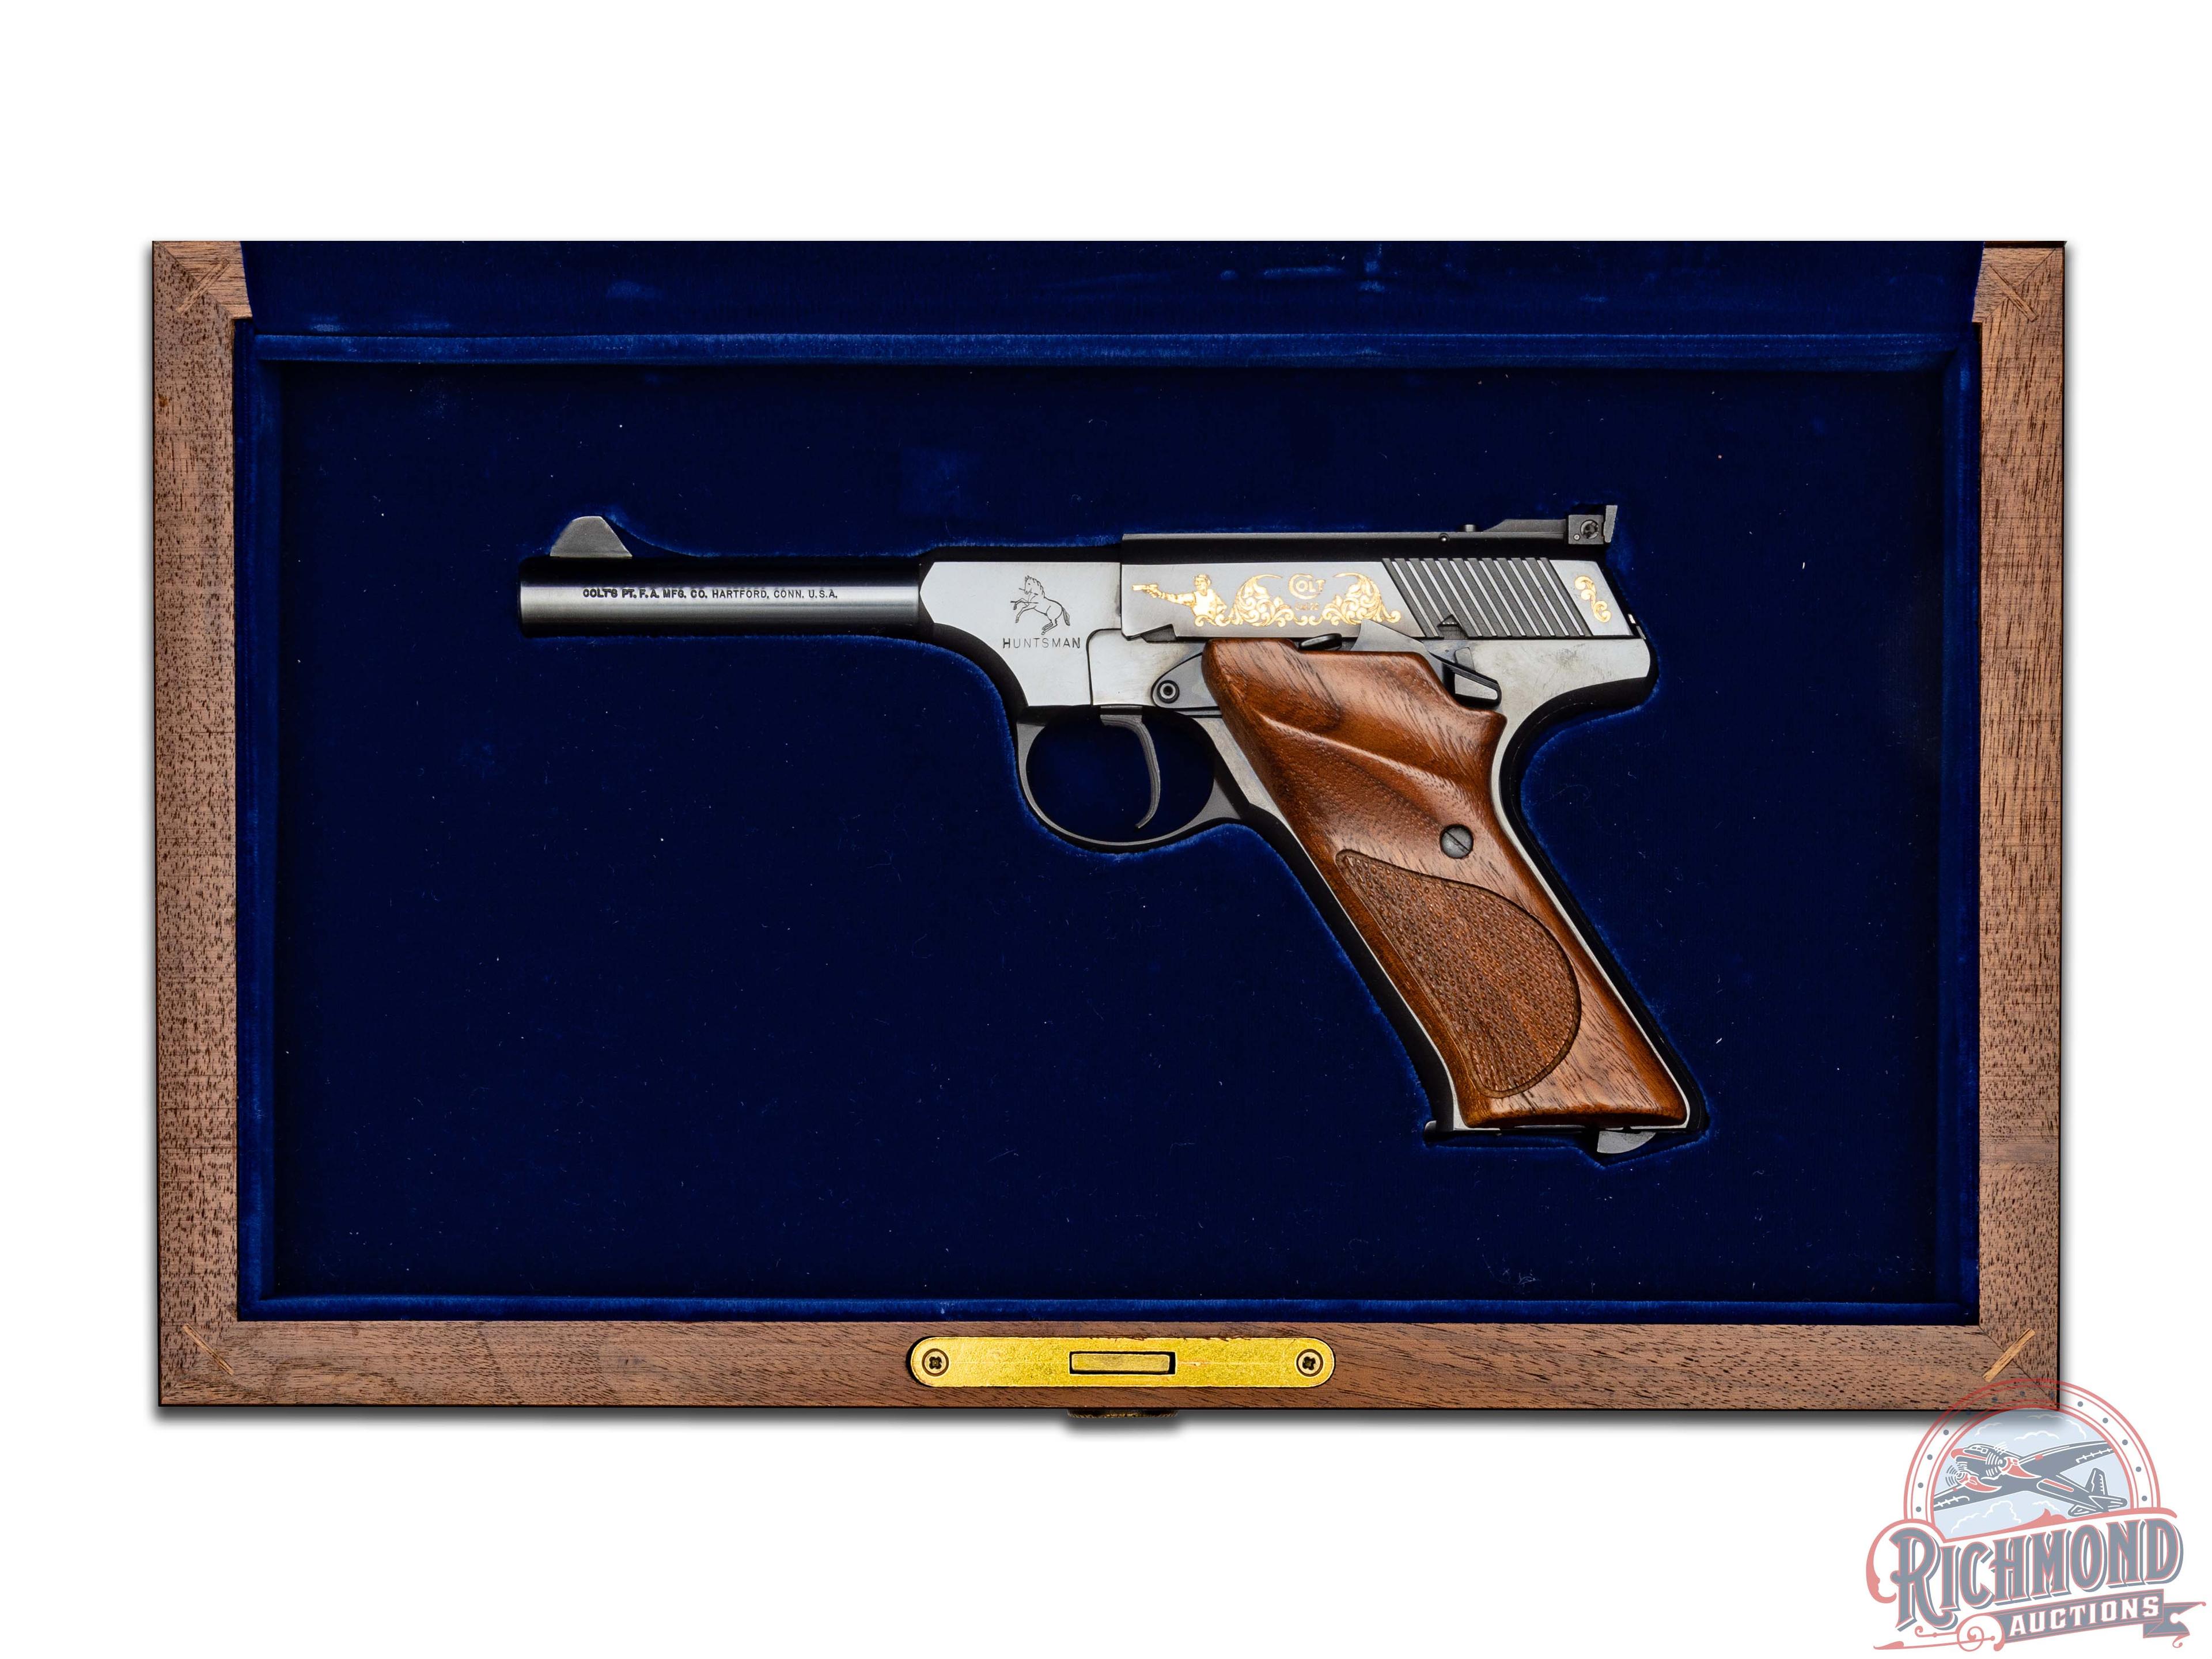 NIB 1983 Colt Custom Shop Huntsman Masters Special Edition .22 LR Semi-Auto in Presentation Case